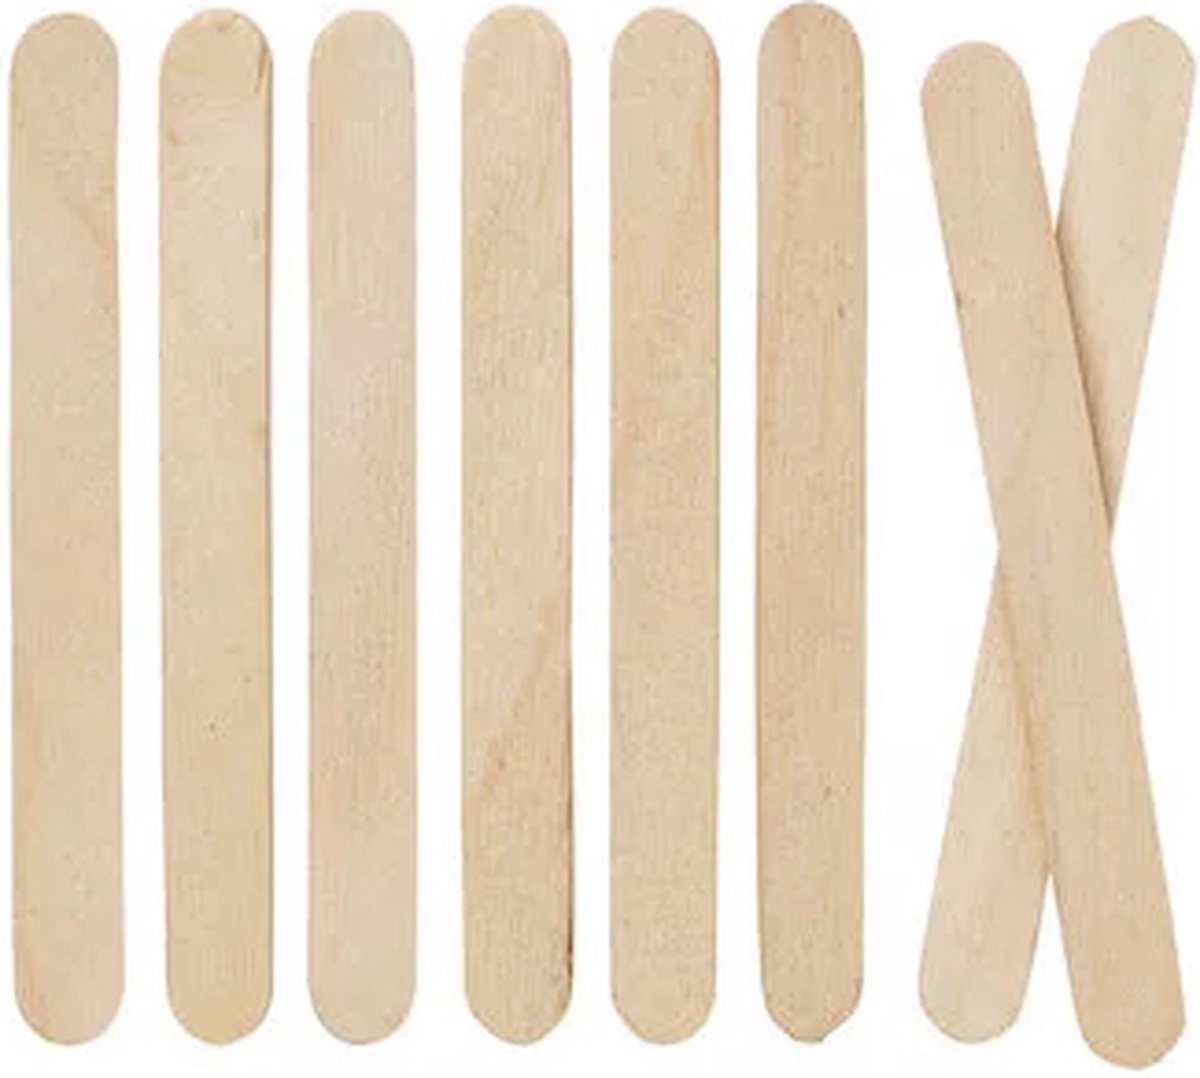 Panduro wooden sticks